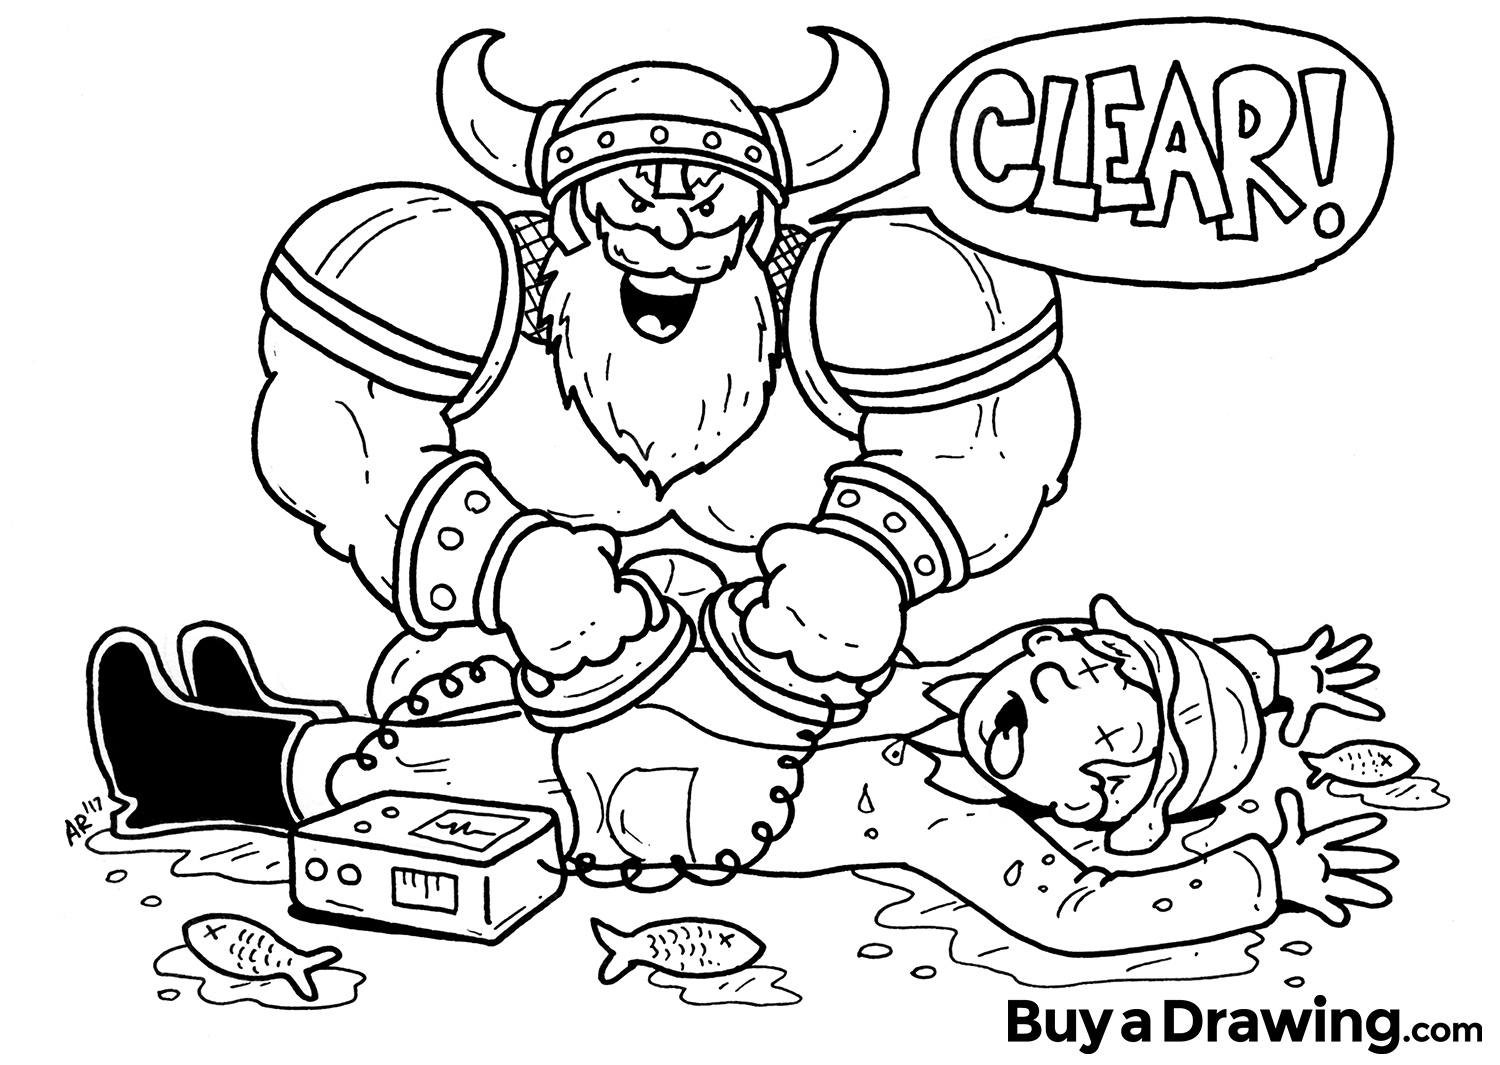 Custom Cartoon Drawing of Tough Viking Giving CPR